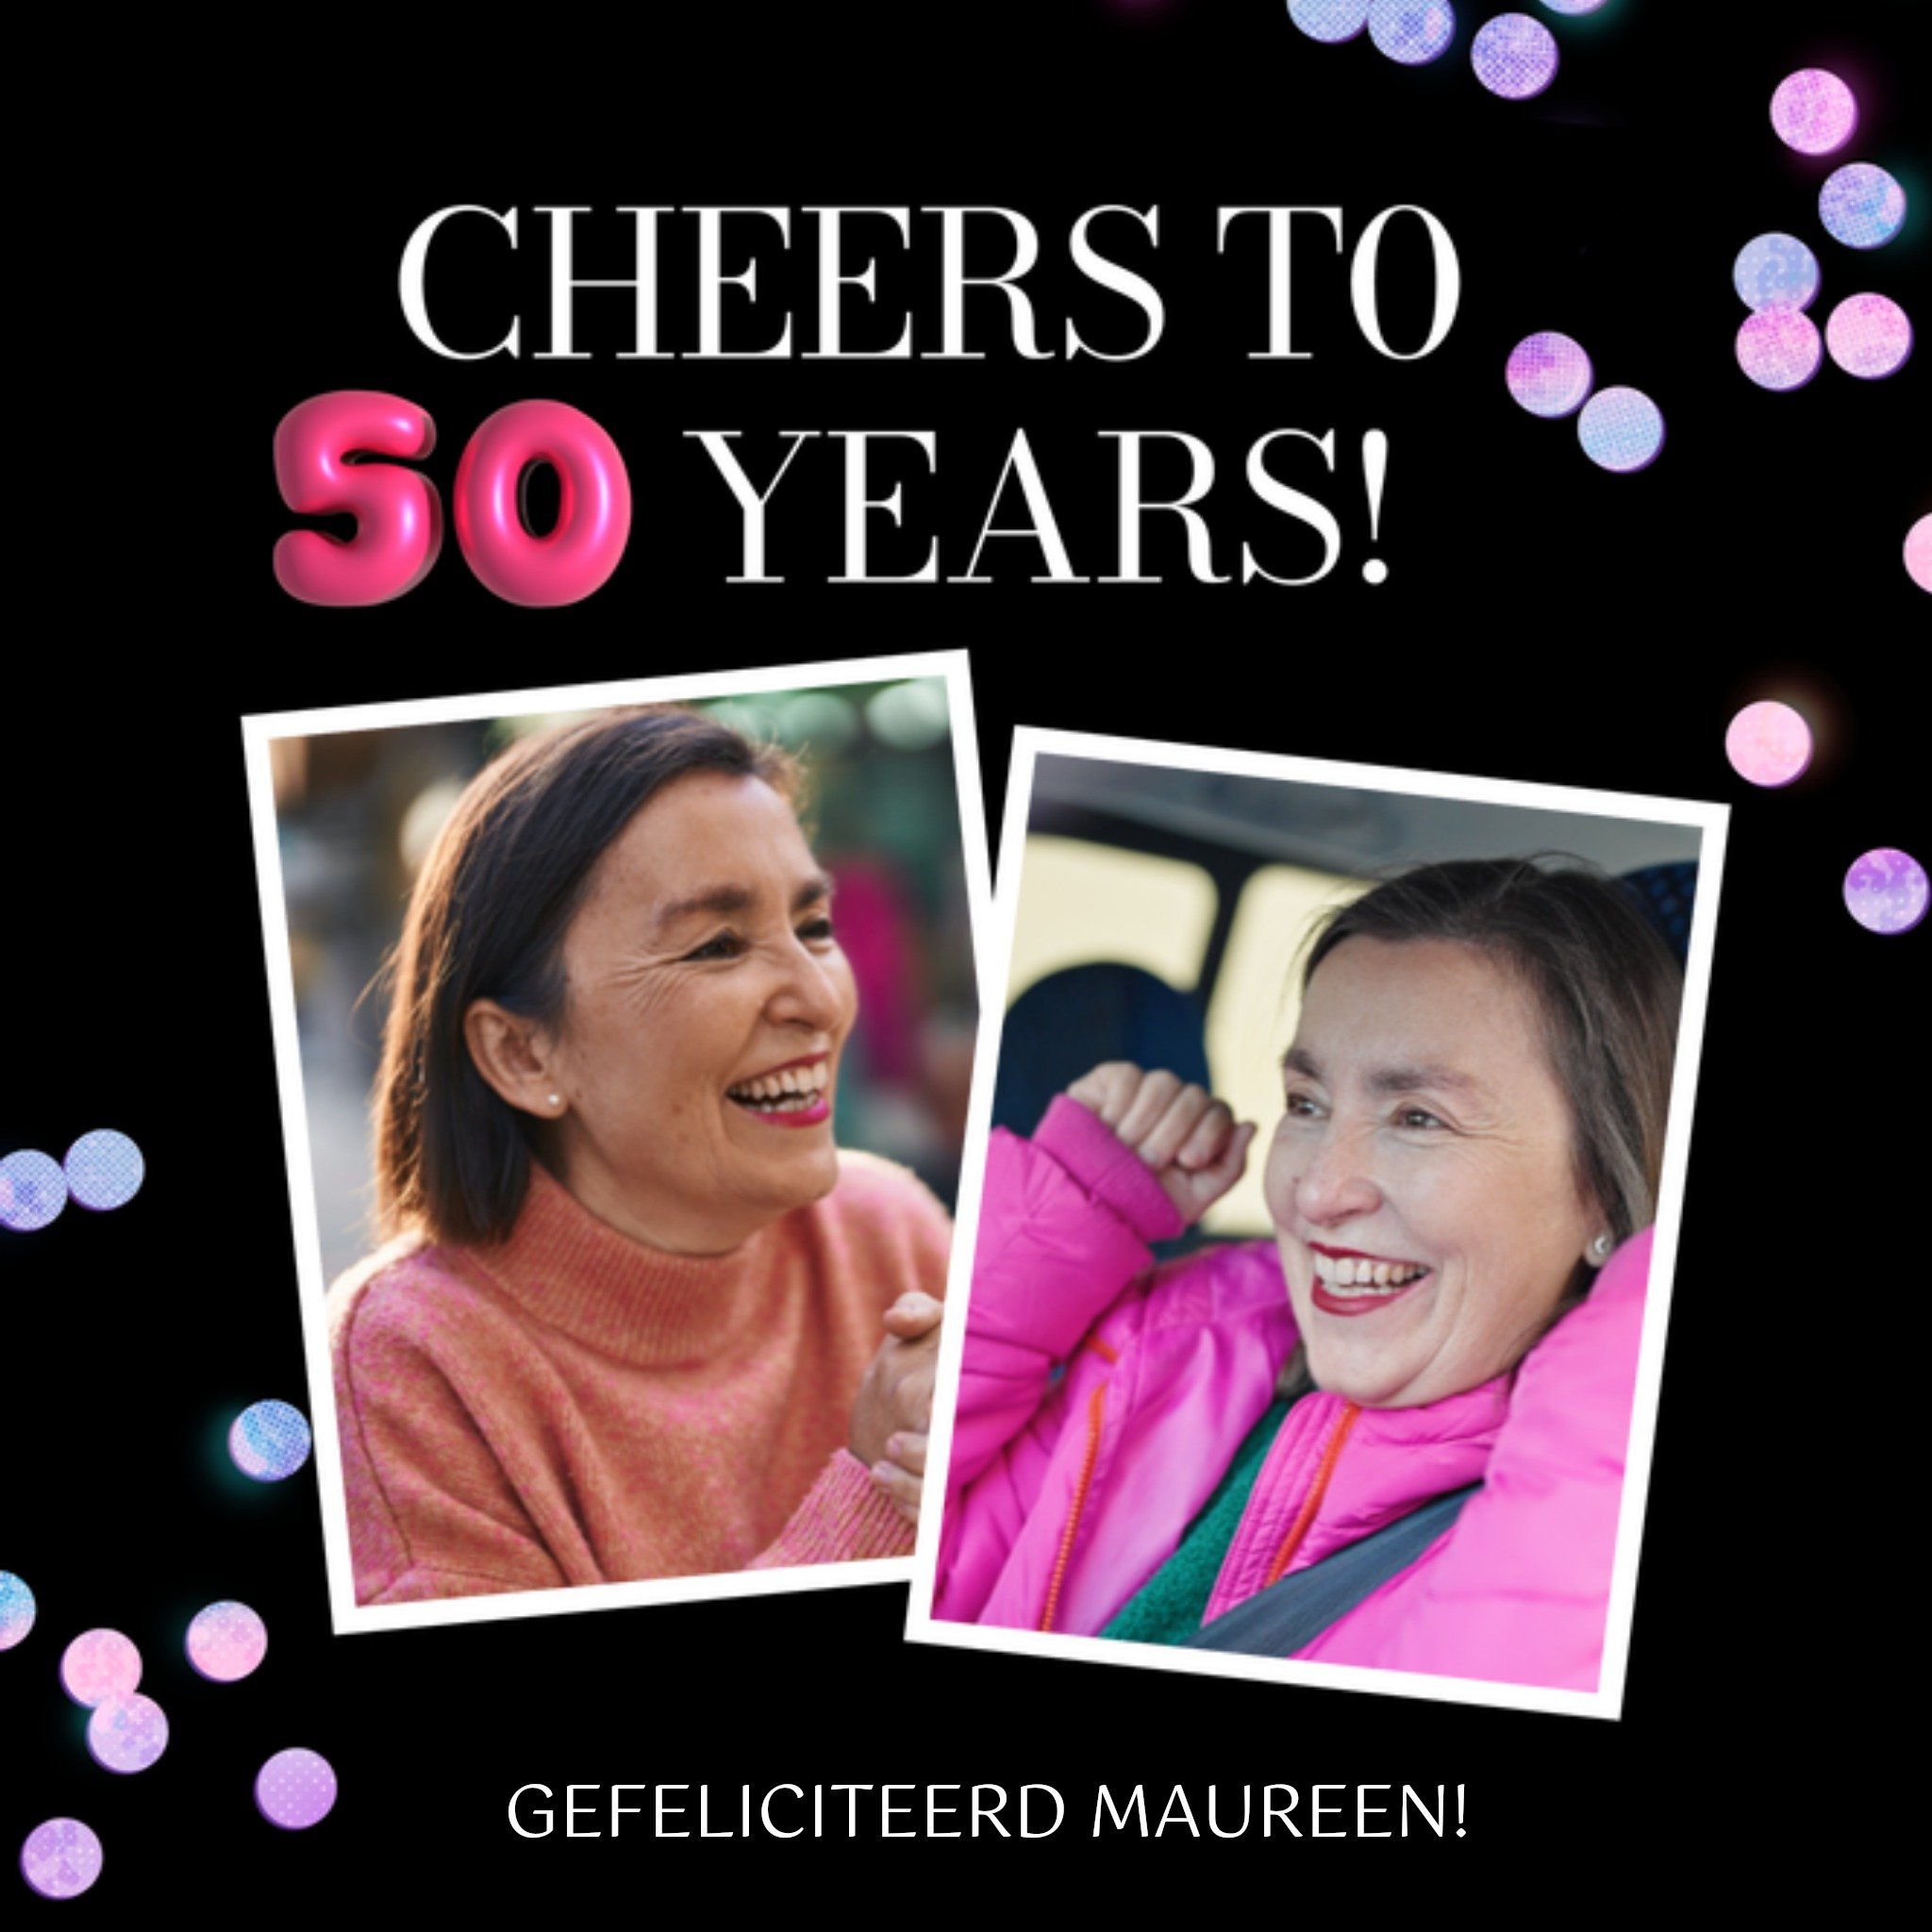 Verjaardagskaart - Cheers to 50 years! - Gefeliciteerd - Fotokaart